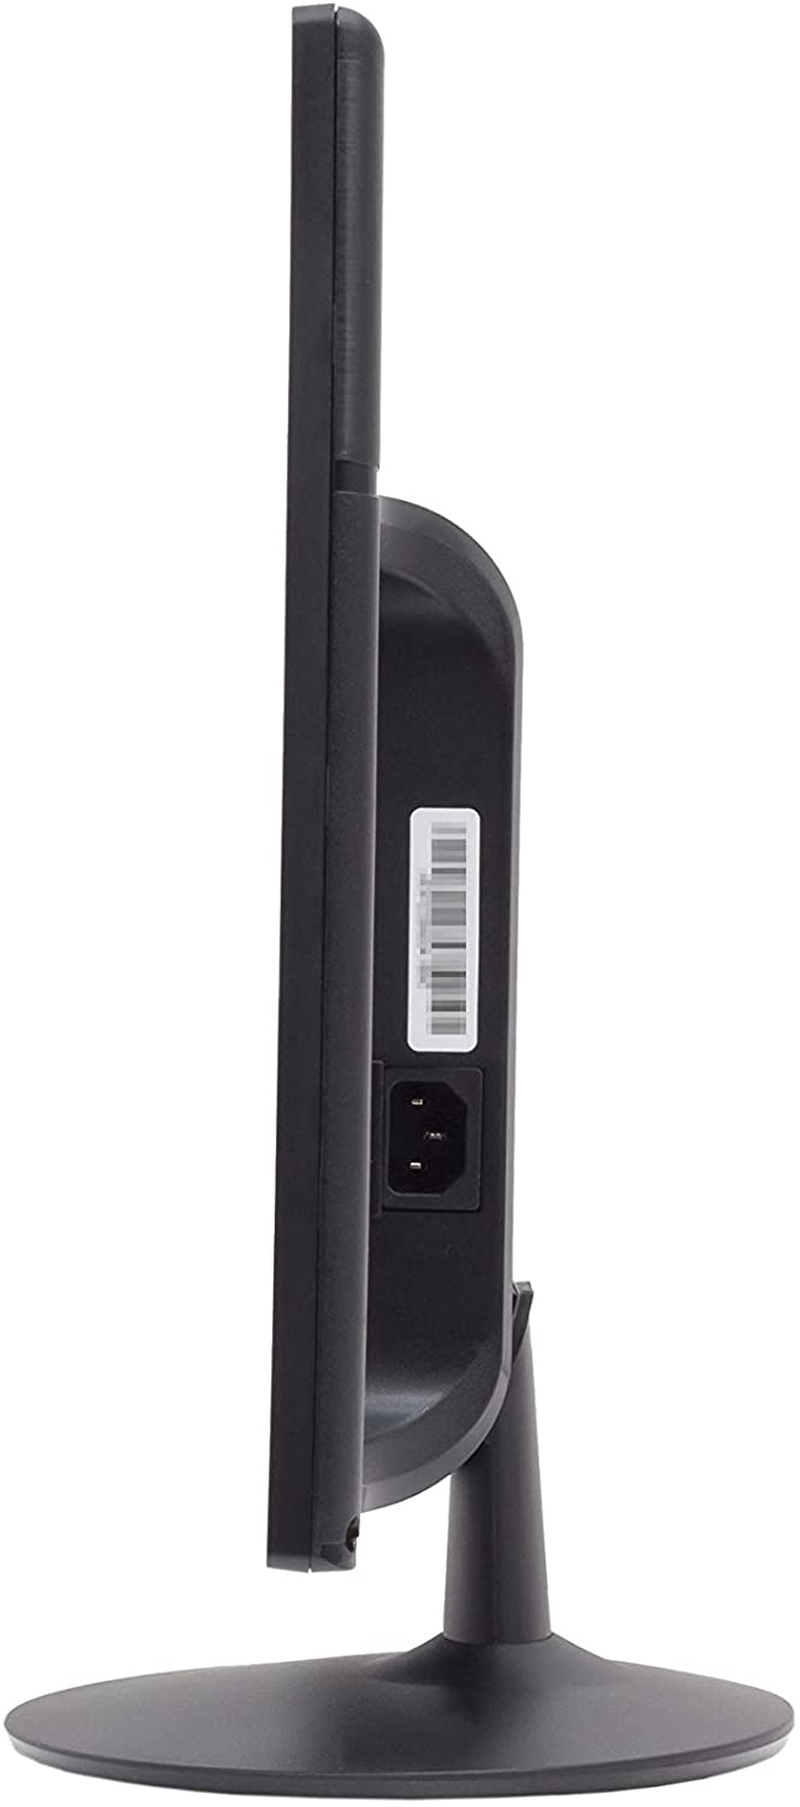 Sceptre 22-Inch 75Hz 1080P LED Monitor HDMI VGA Build-In Speakers, Brushed Black 2019 (E225W-19203S), Metal Black